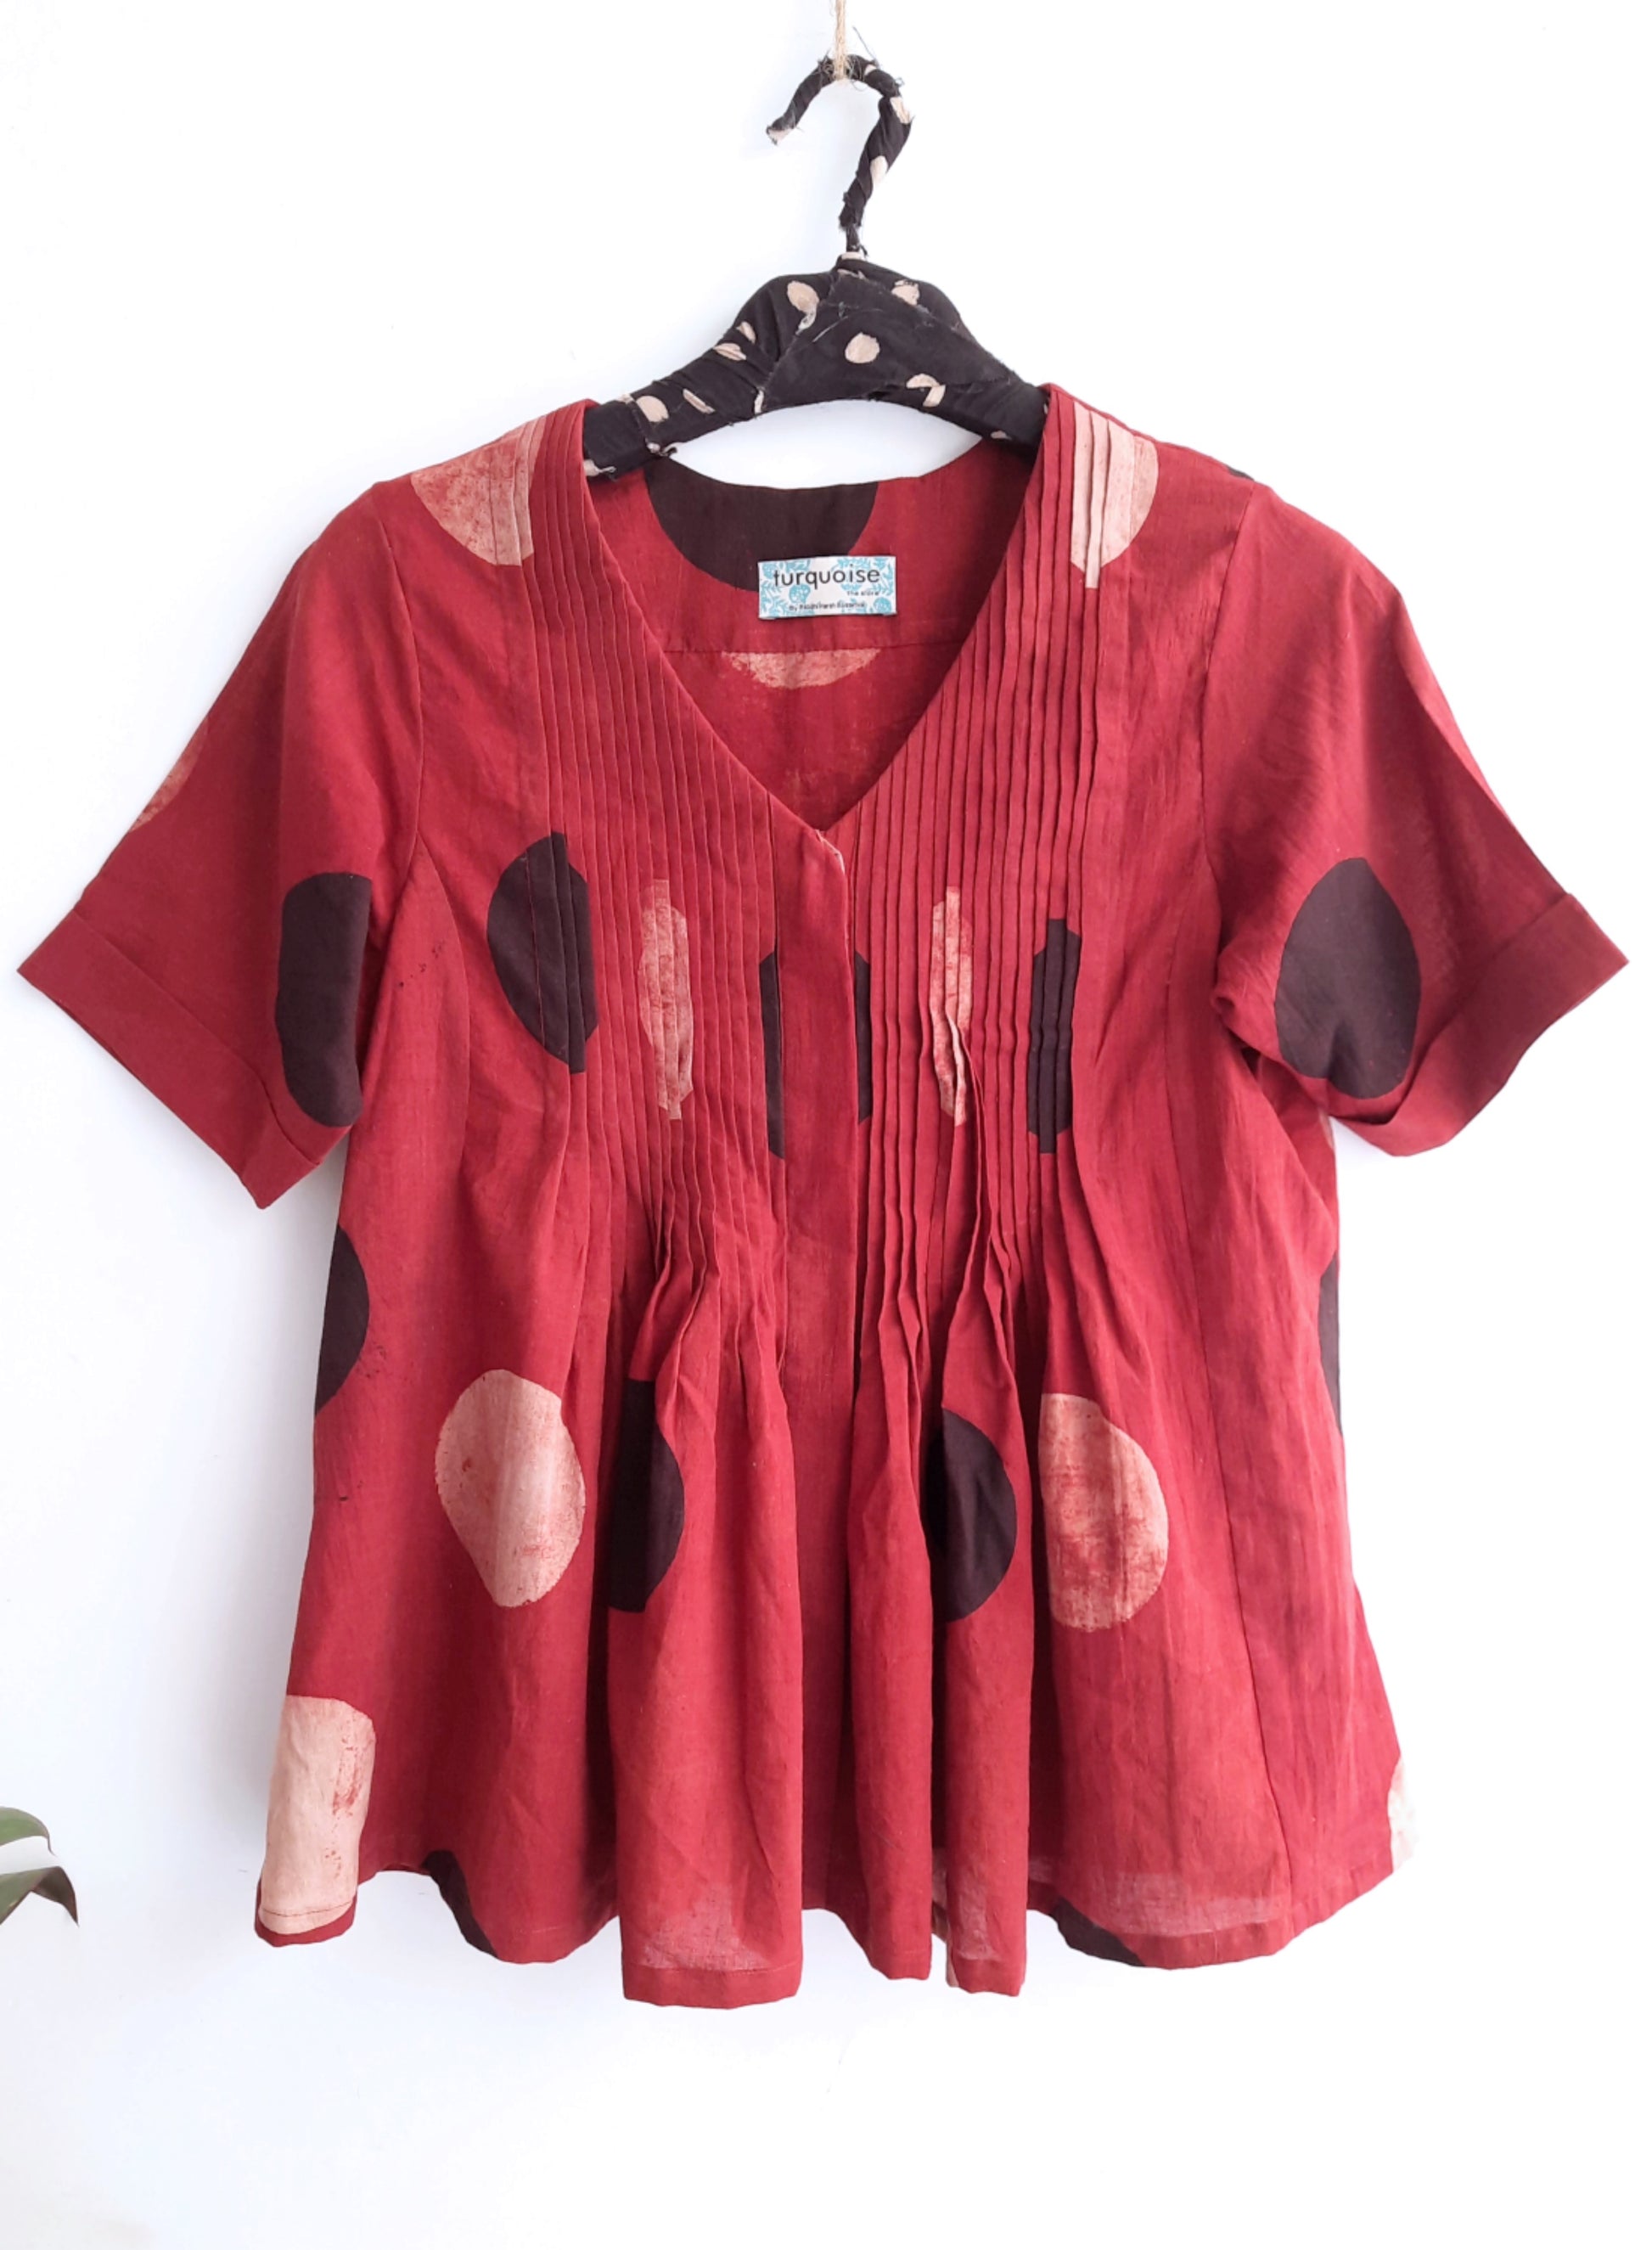 Madder dyed moon print ajrakh top, Slow fashion, Natural dyed shirt